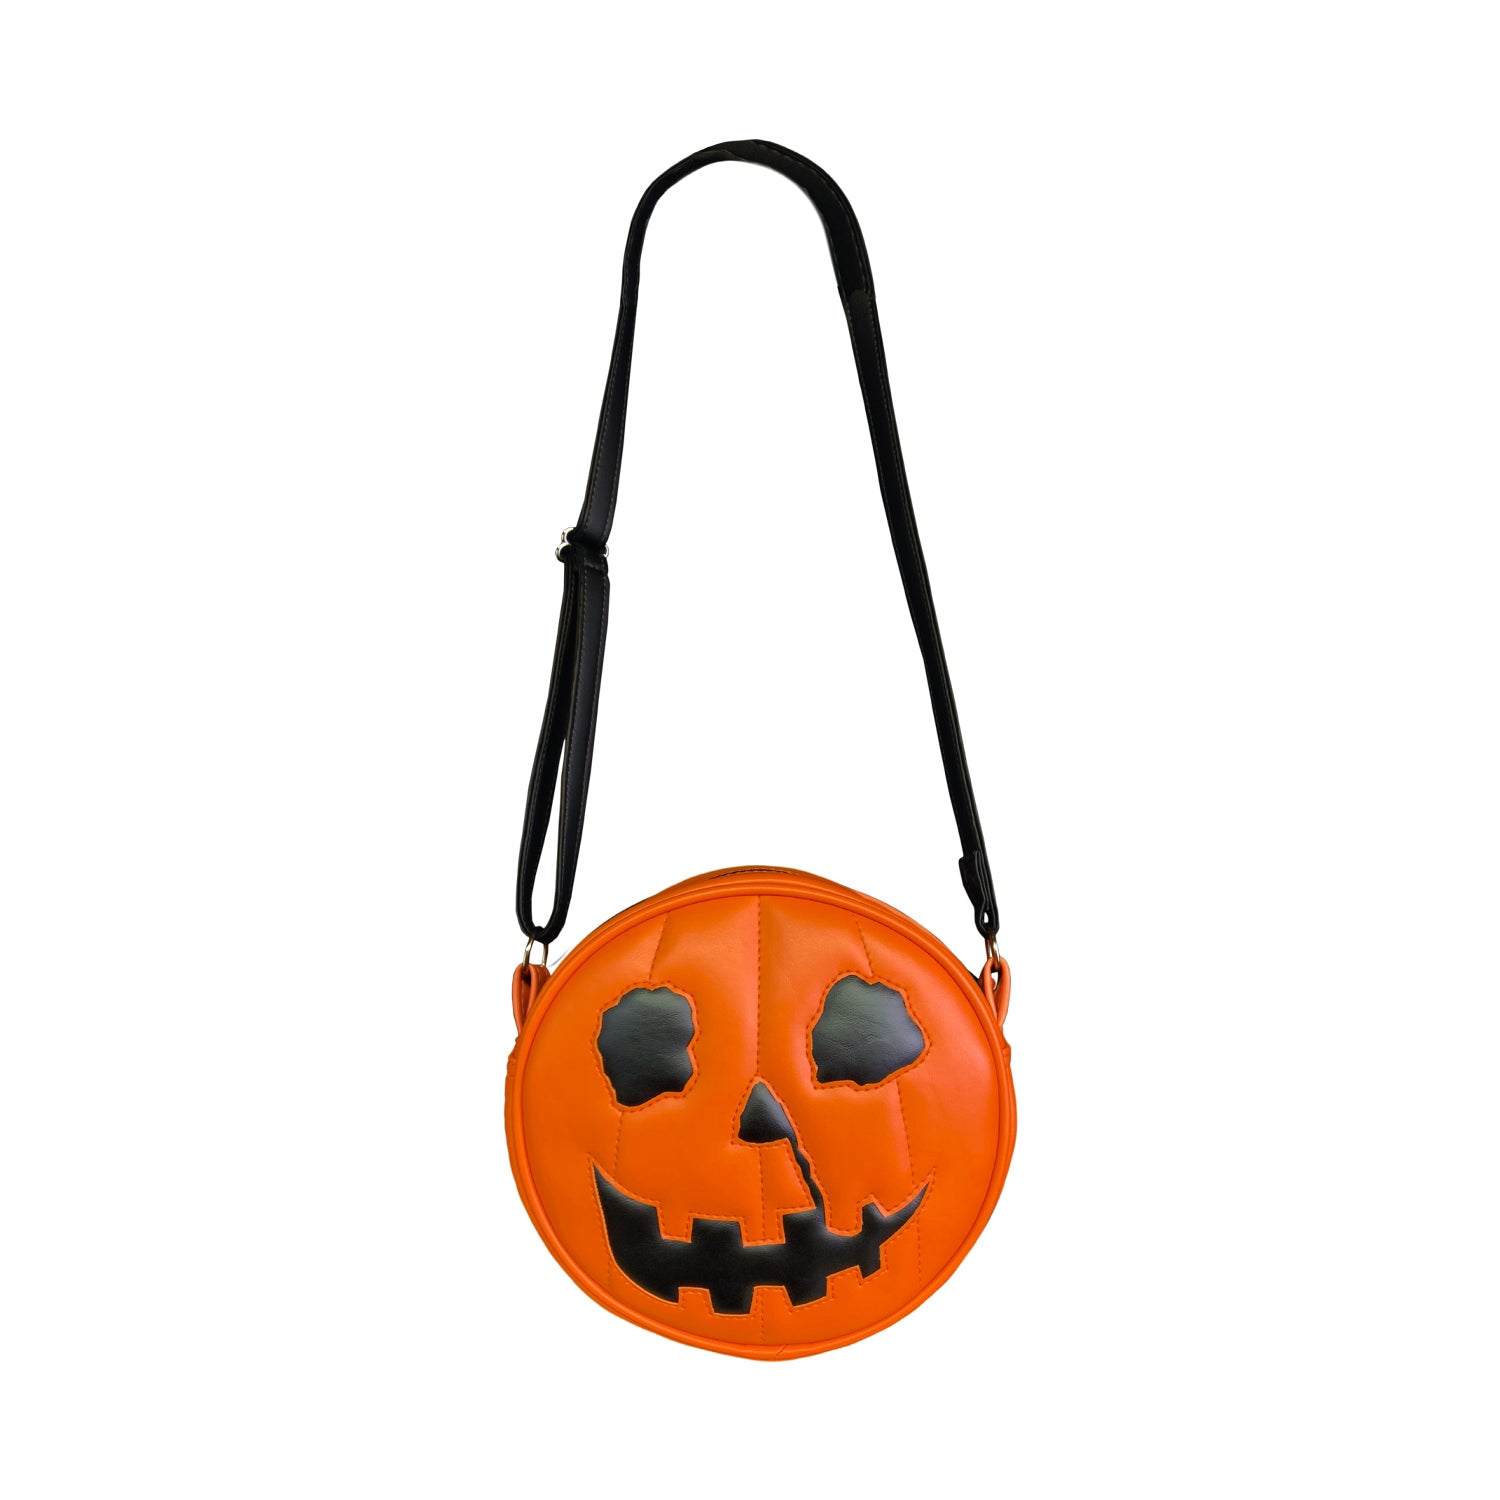 KATI100 halloween pumpkin purse